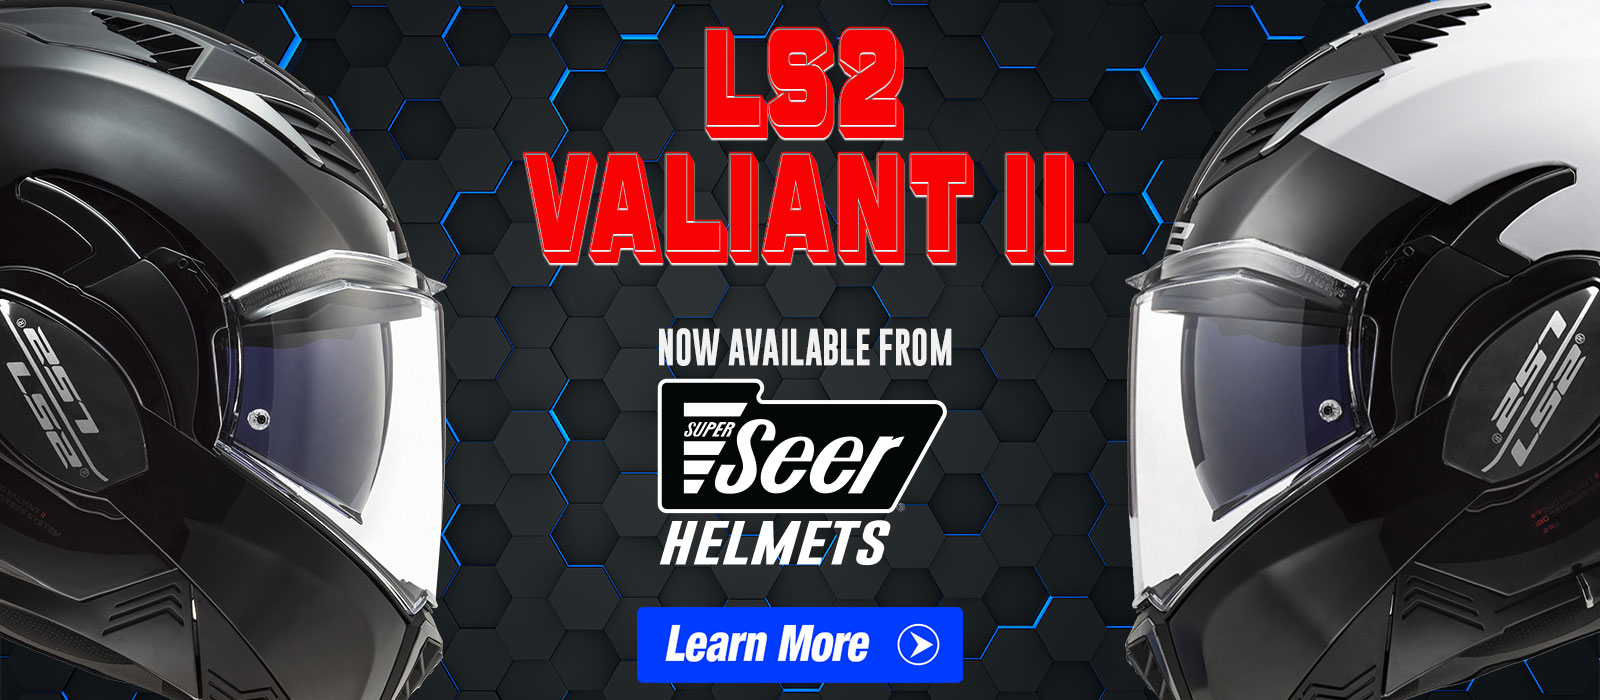 LS2 VALIANT Modular Helmet